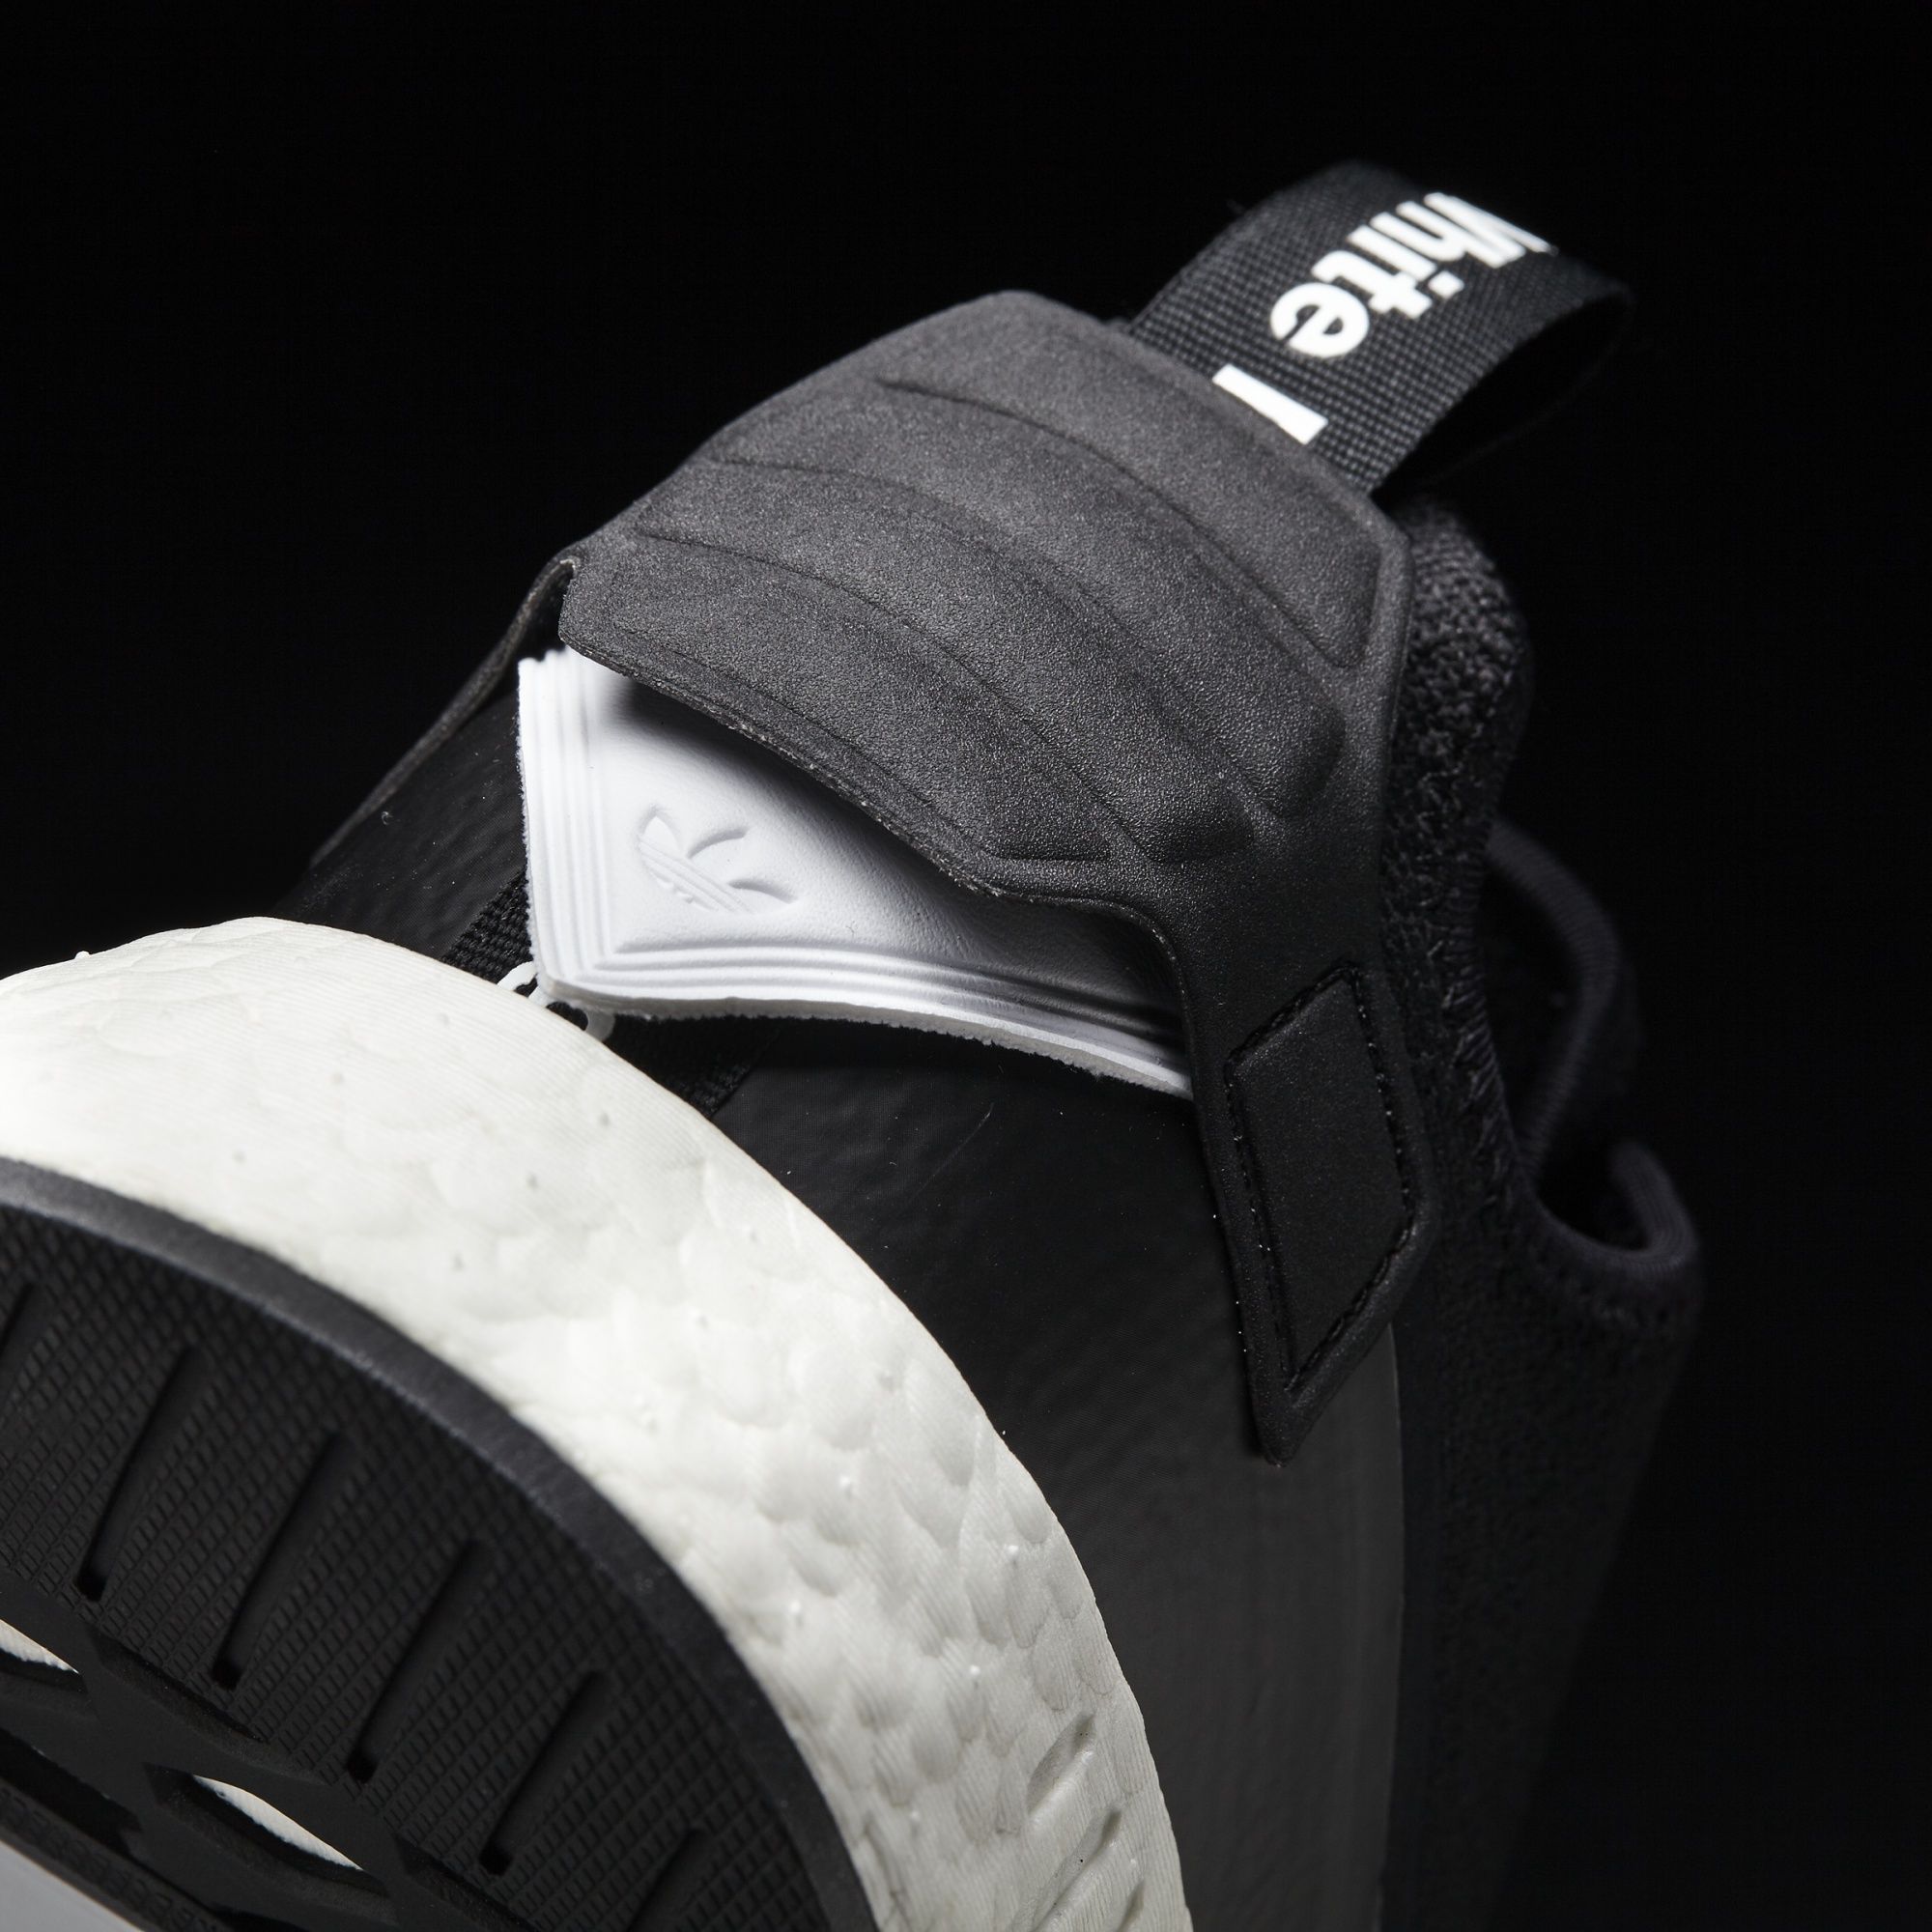 Adidas x White Mountaineering NMD_R2
Core Black / Footwear White